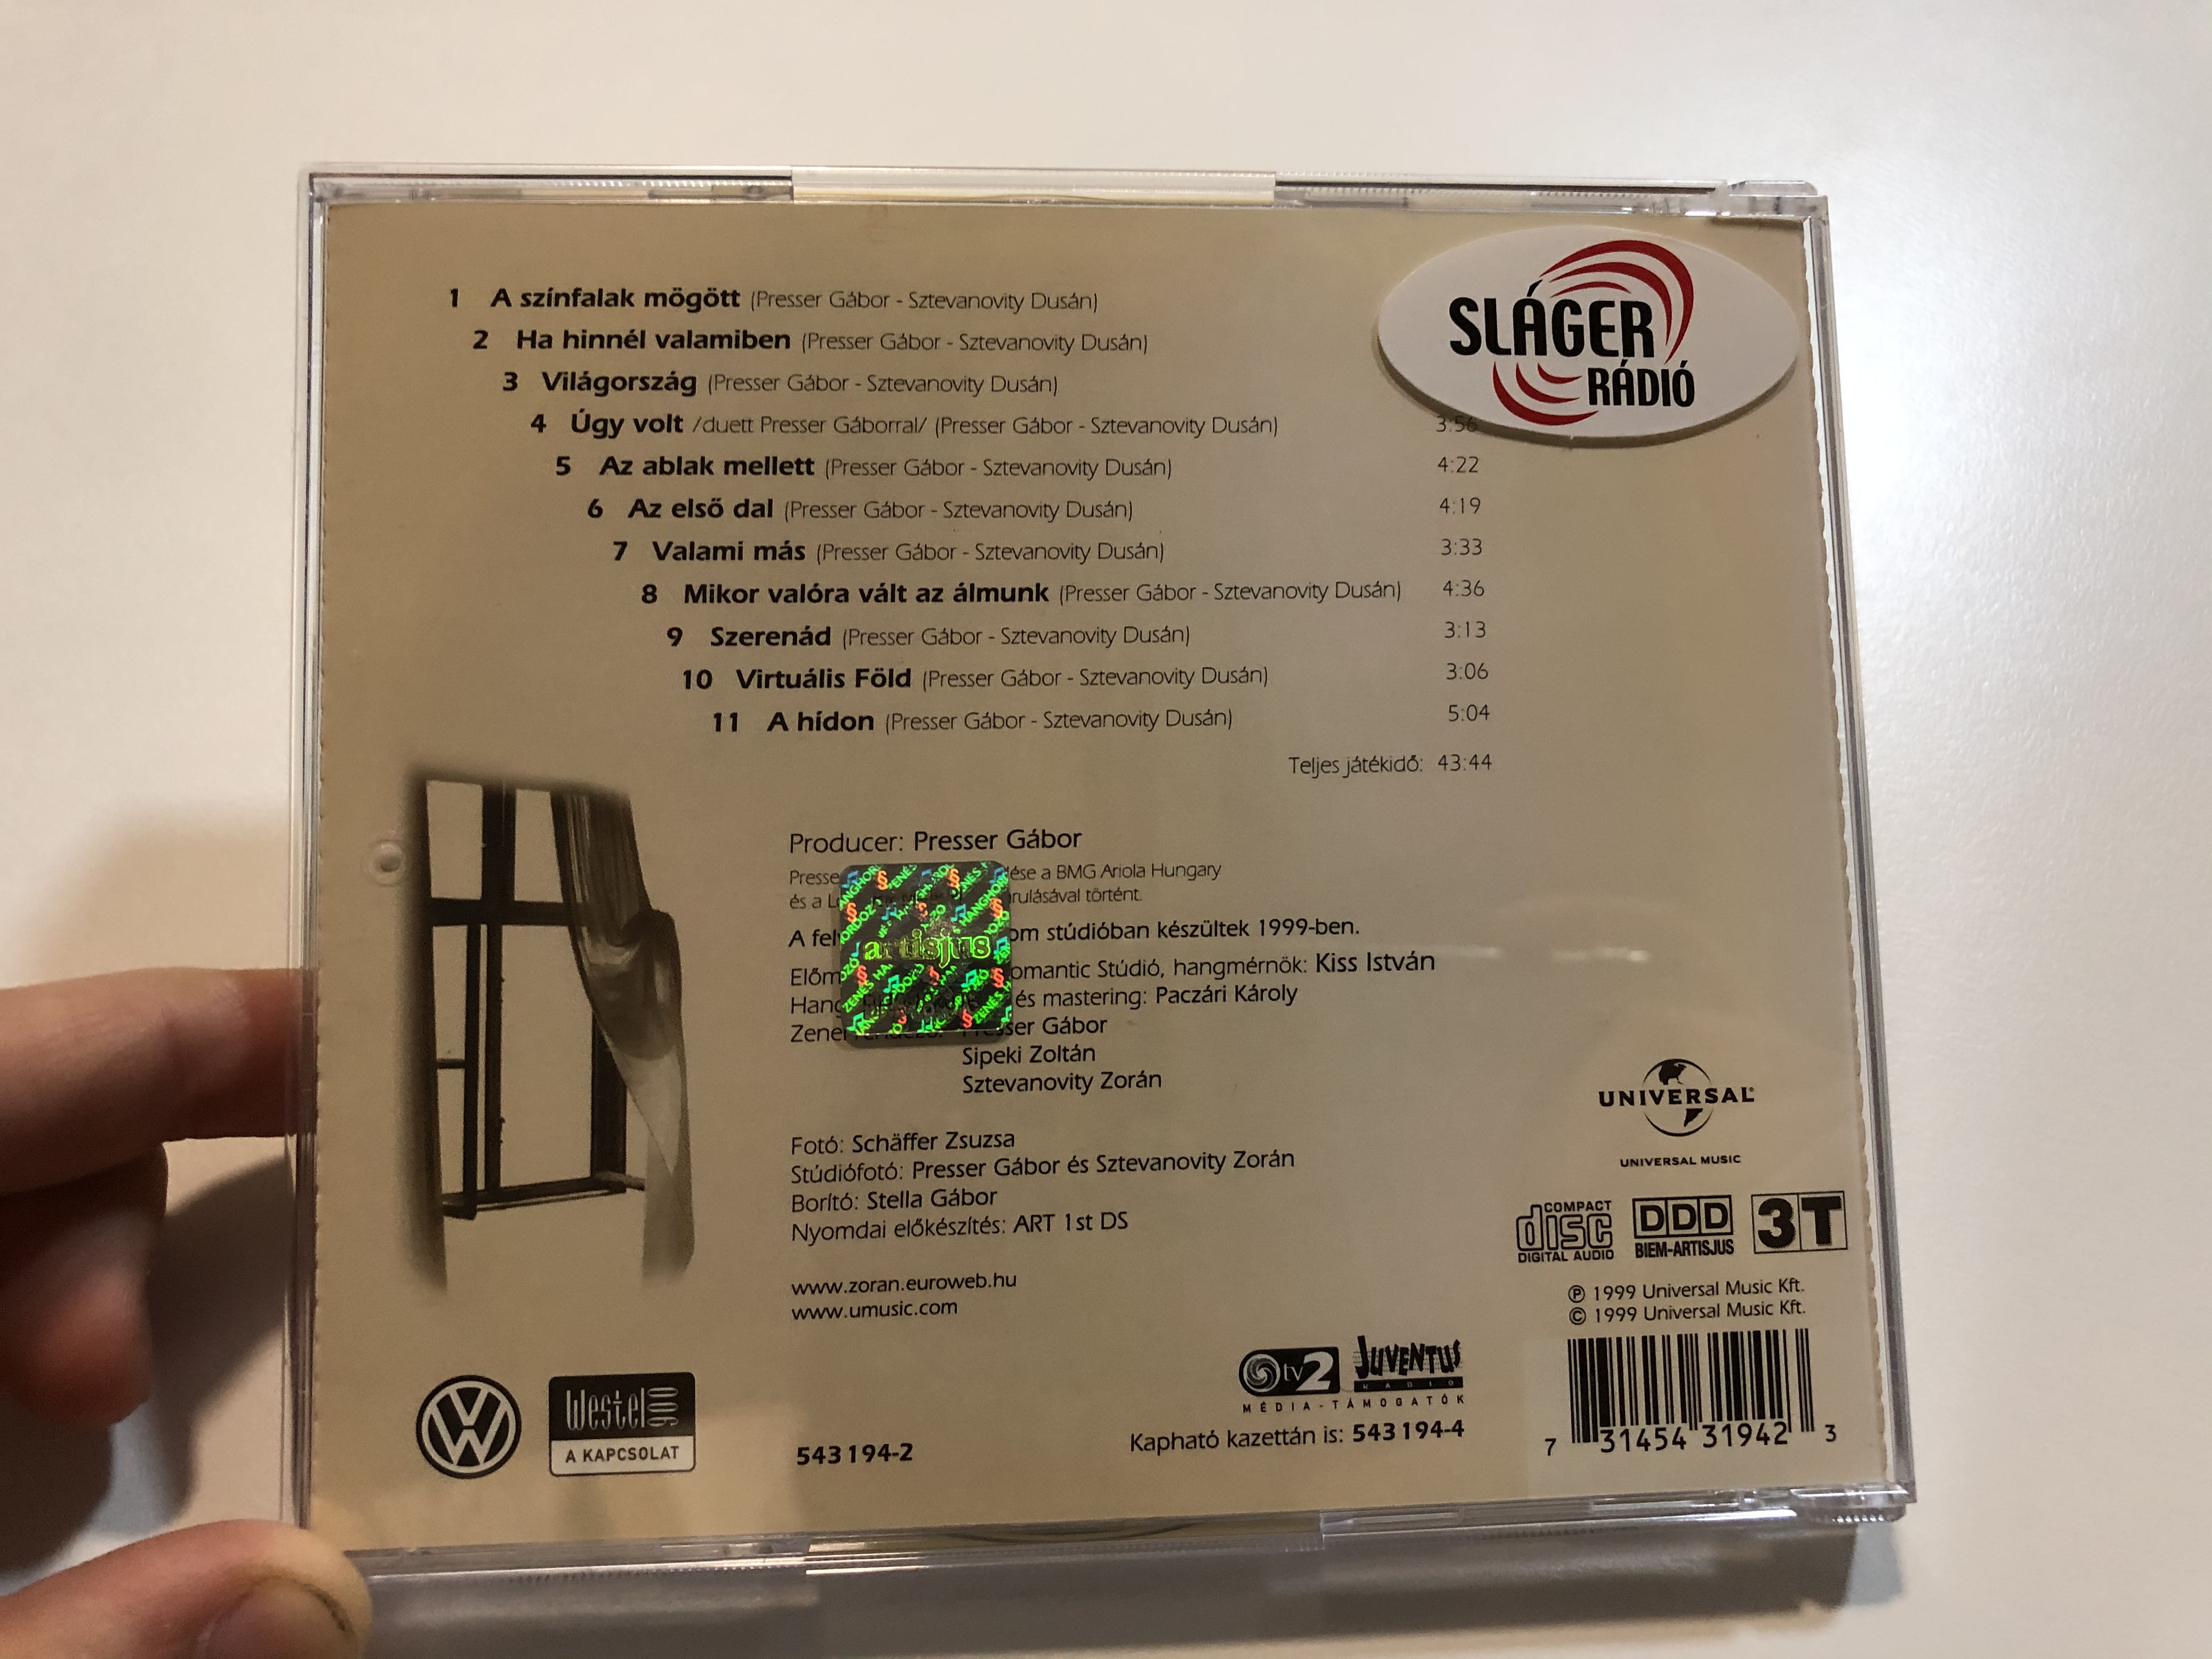 zor-n-az-ablak-mellett-universal-music-audio-cd-1999-543-194-2-9-.jpg